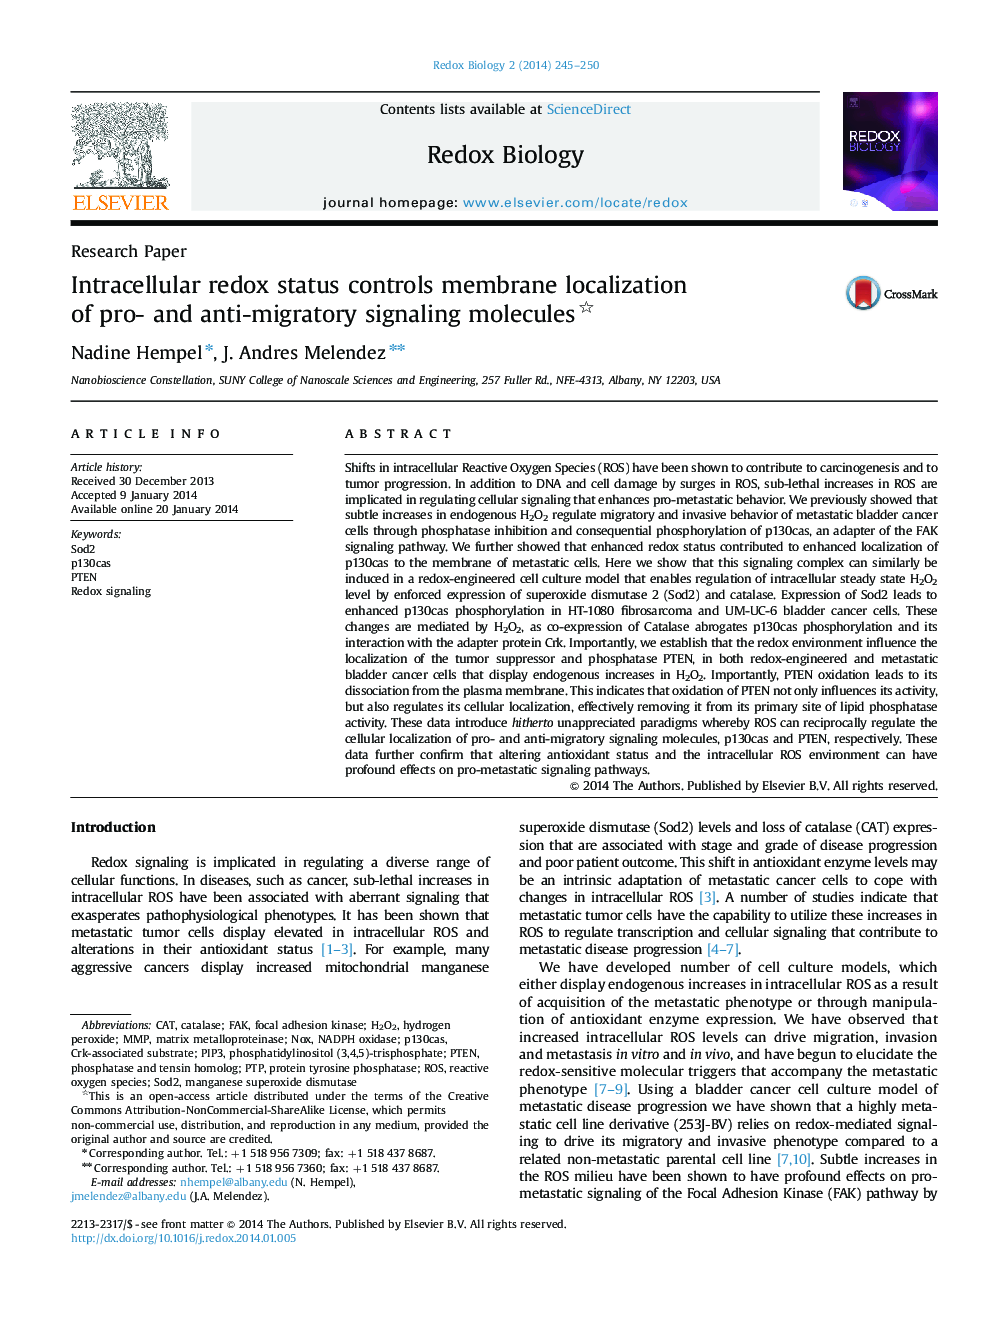 Intracellular redox status controls membrane localization of pro- and anti-migratory signaling molecules 